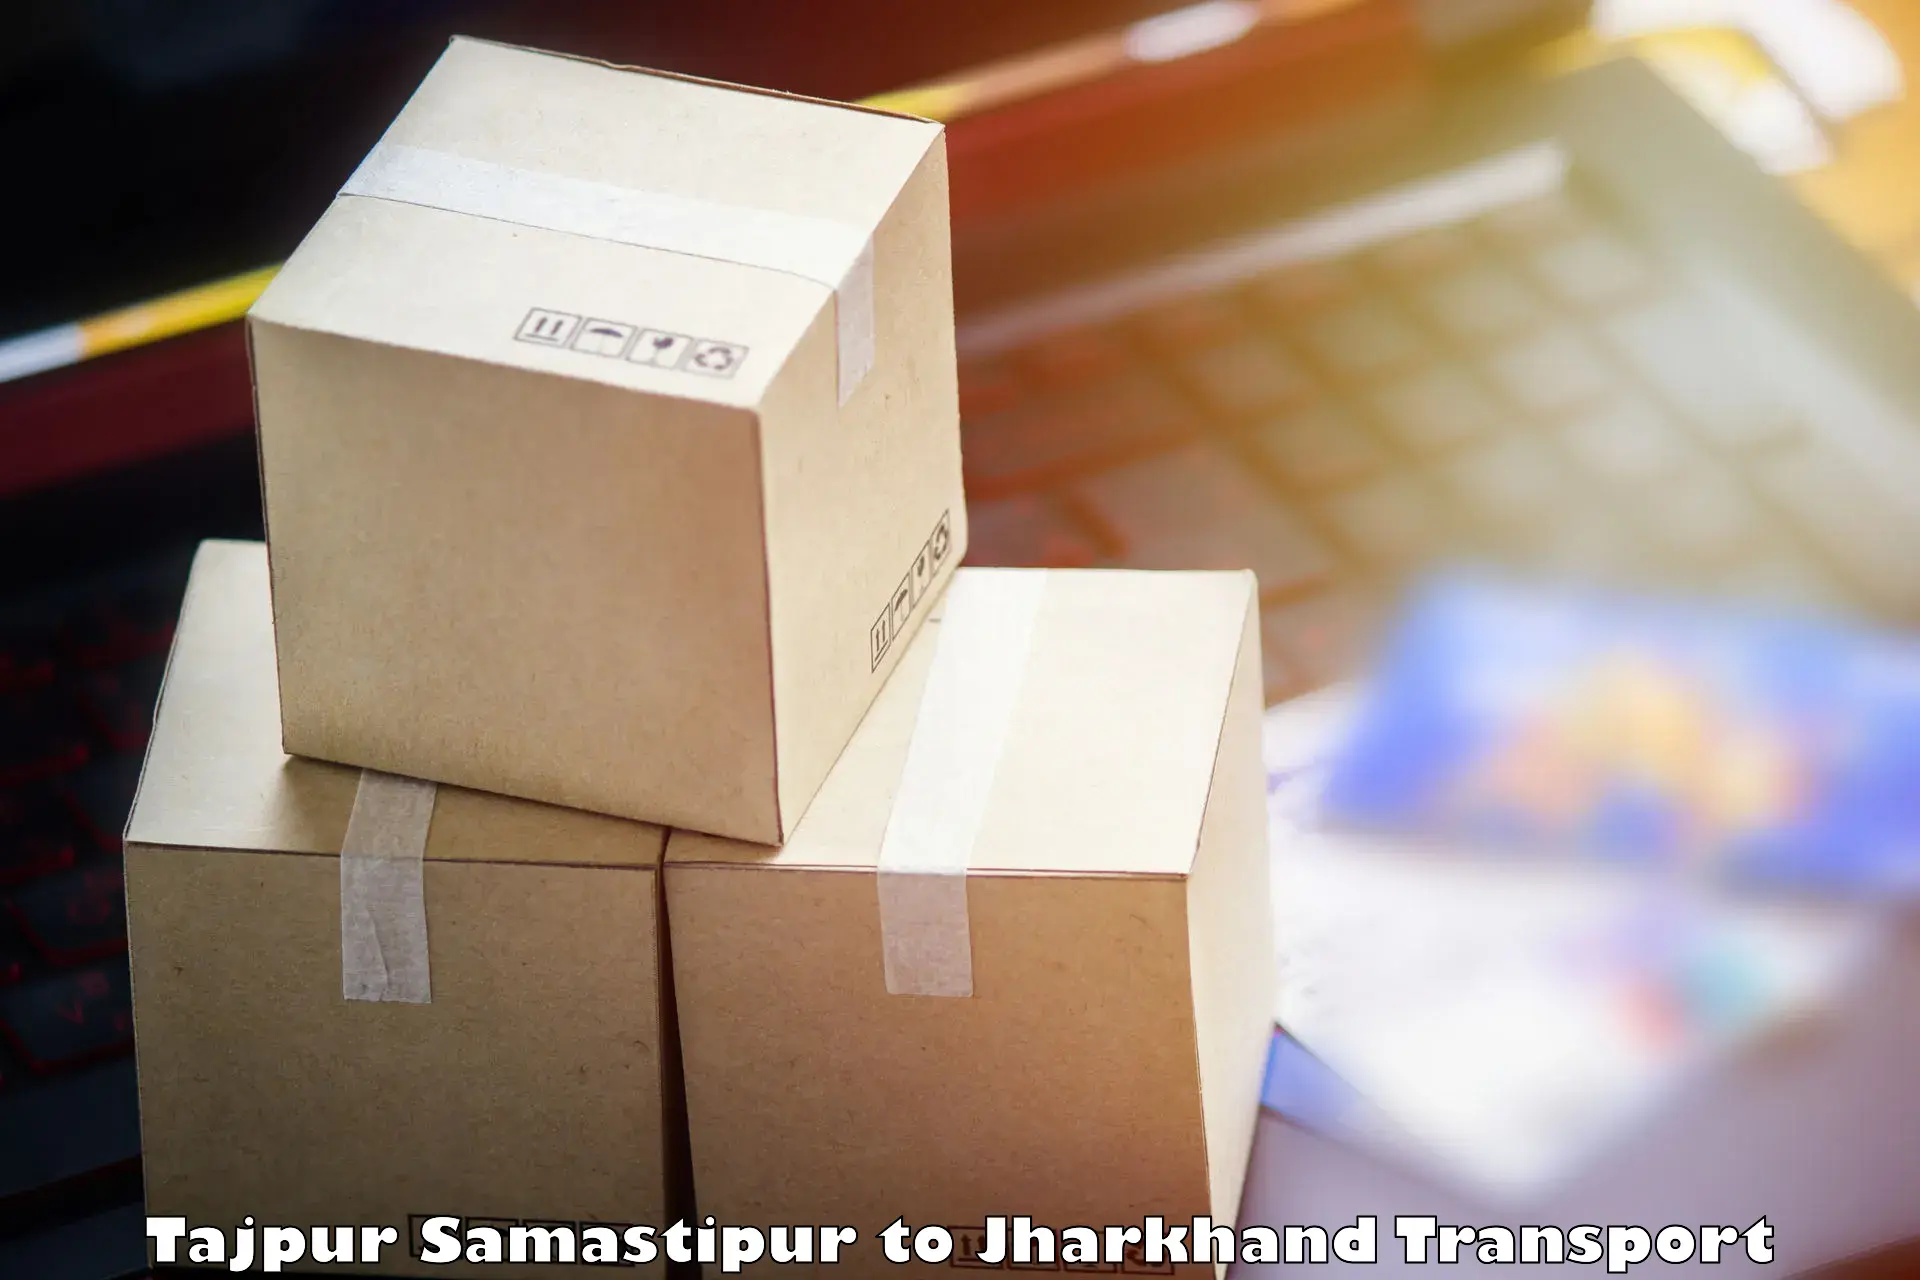 Shipping services Tajpur Samastipur to Dhanbad